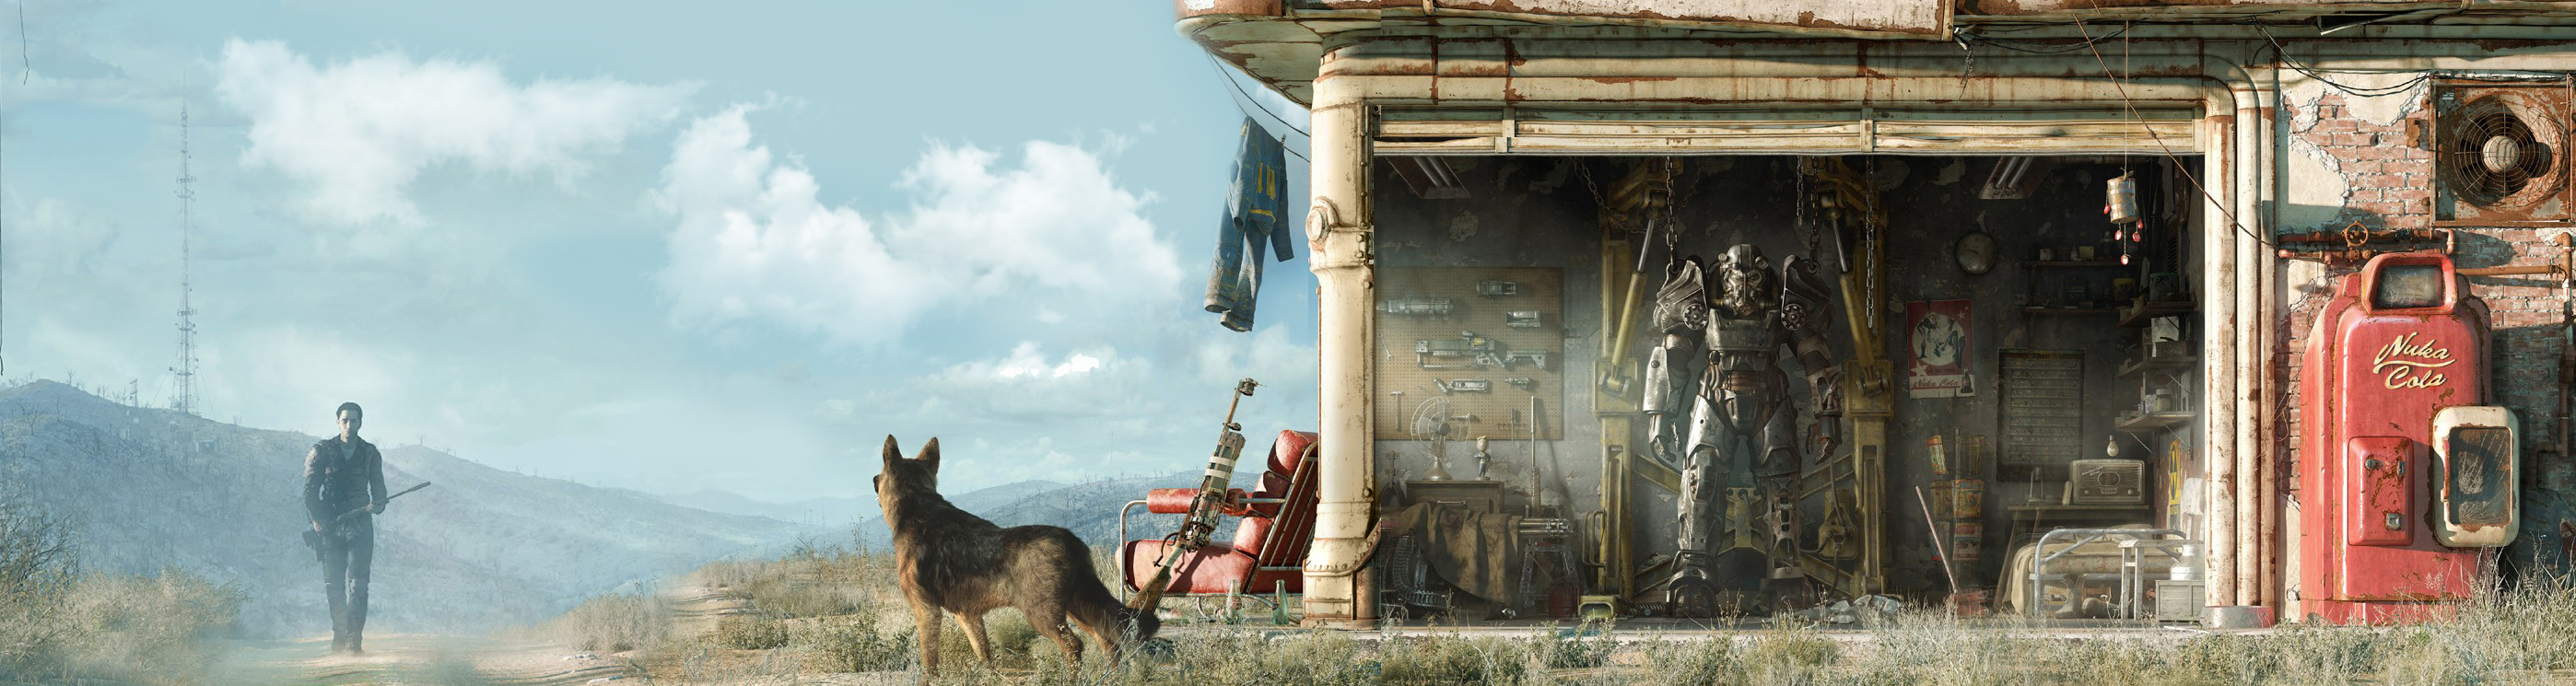 Fallout 4 заставка музыка фото 101